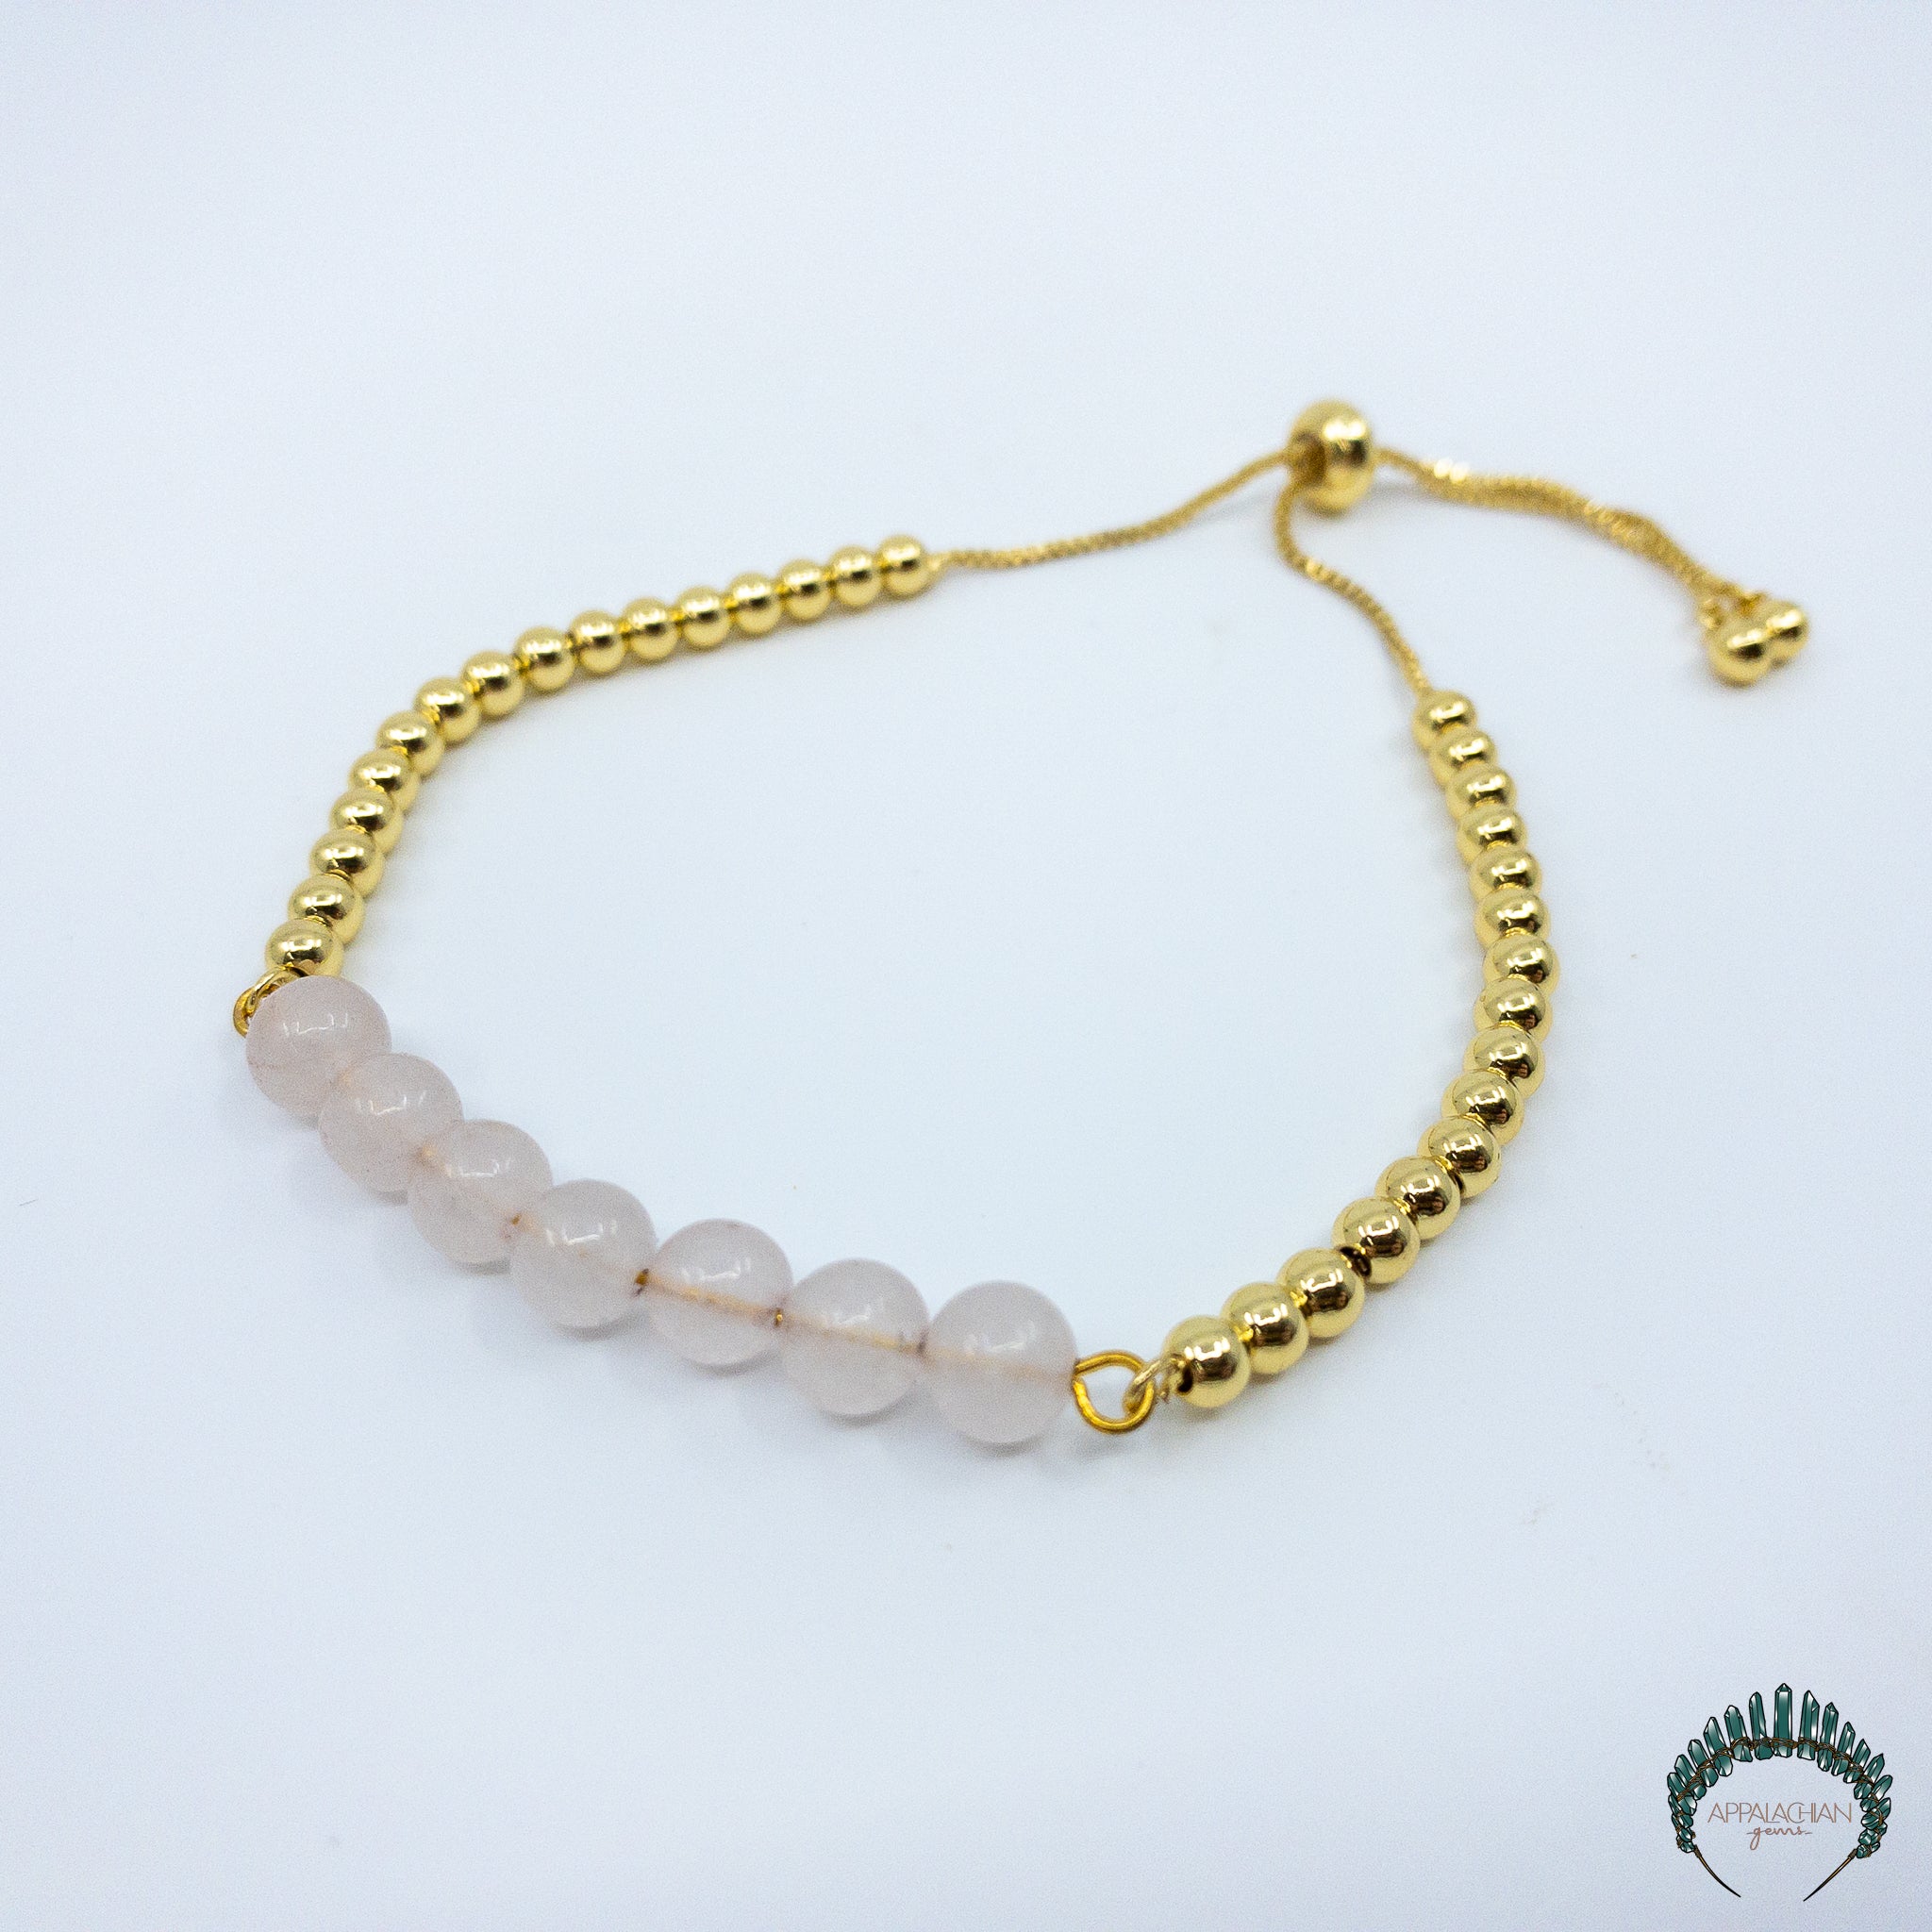 Rose Quartz Bracelet - Appalachian Gems